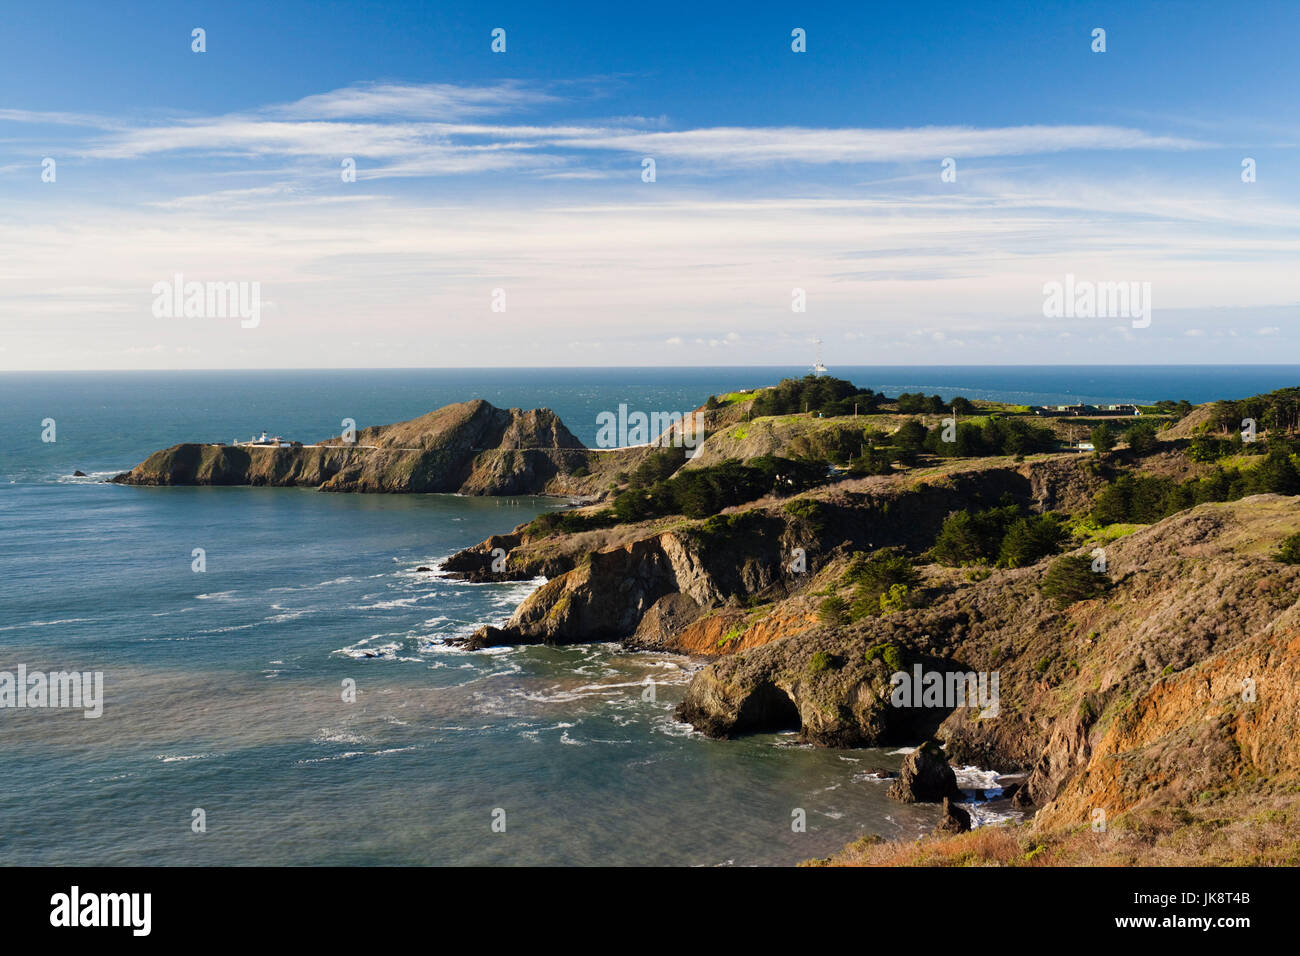 USA, California, San Francisco Bay Area, Marin Headlands, Golden Gate National Recreation Area, Point Bonita, morning Stock Photo